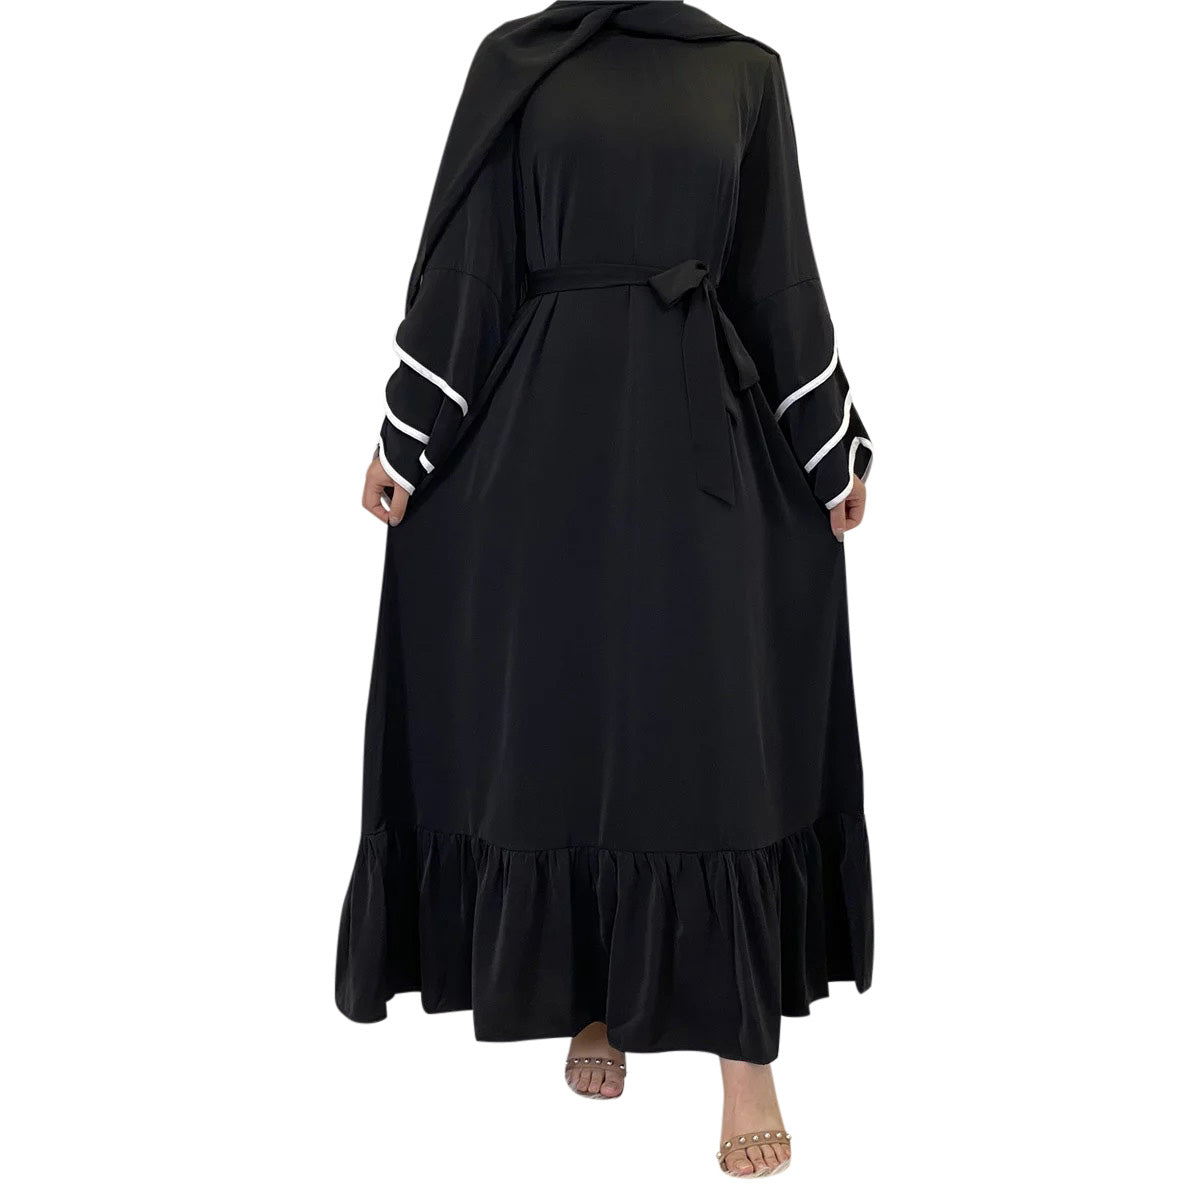 Hinaya Abaya Dress |Modest Maxi Dress with Belt| Eid Ramadan Outfit